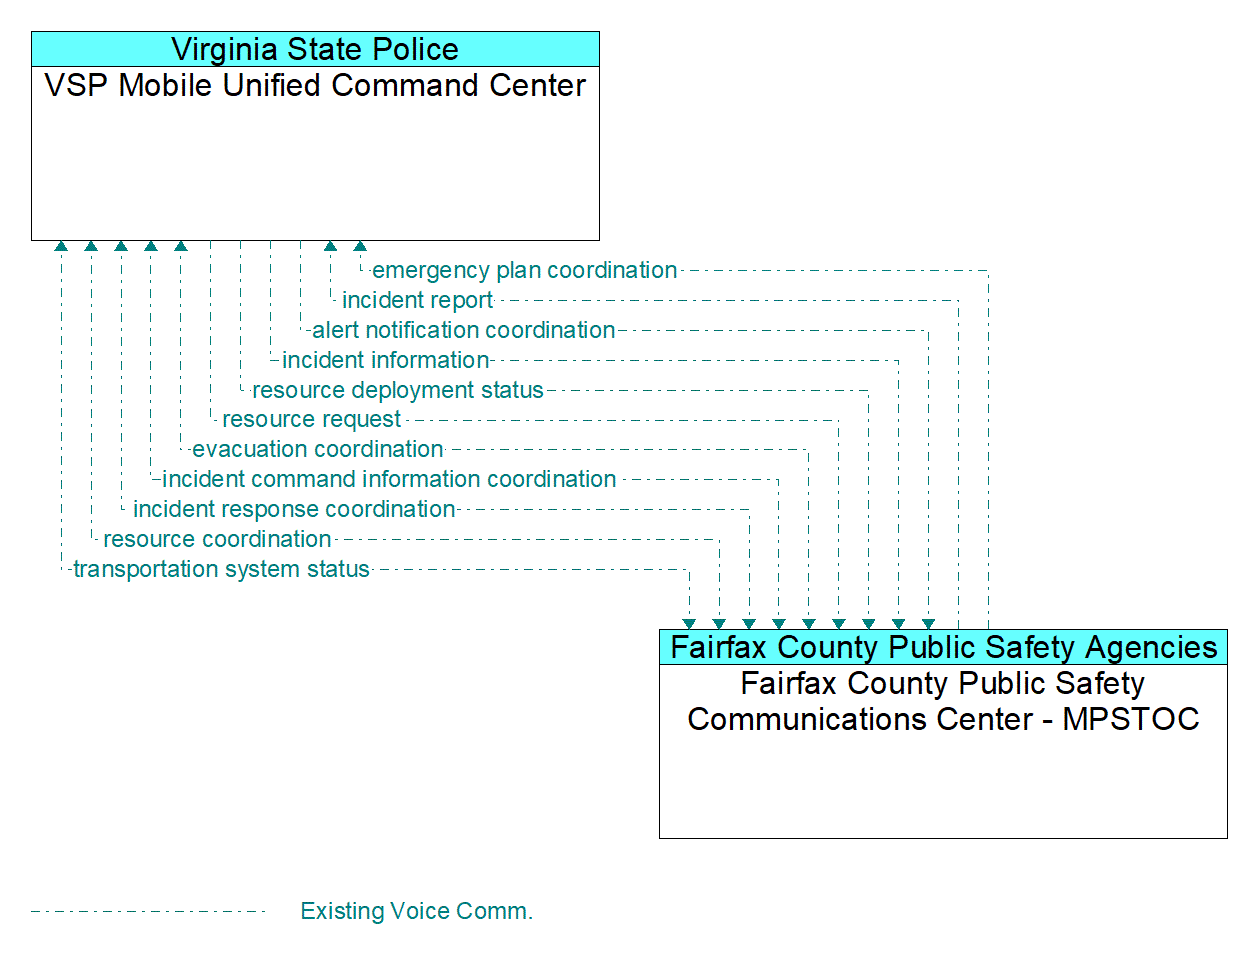 Architecture Flow Diagram: Fairfax County Public Safety Communications Center - MPSTOC <--> VSP Mobile Unified Command Center